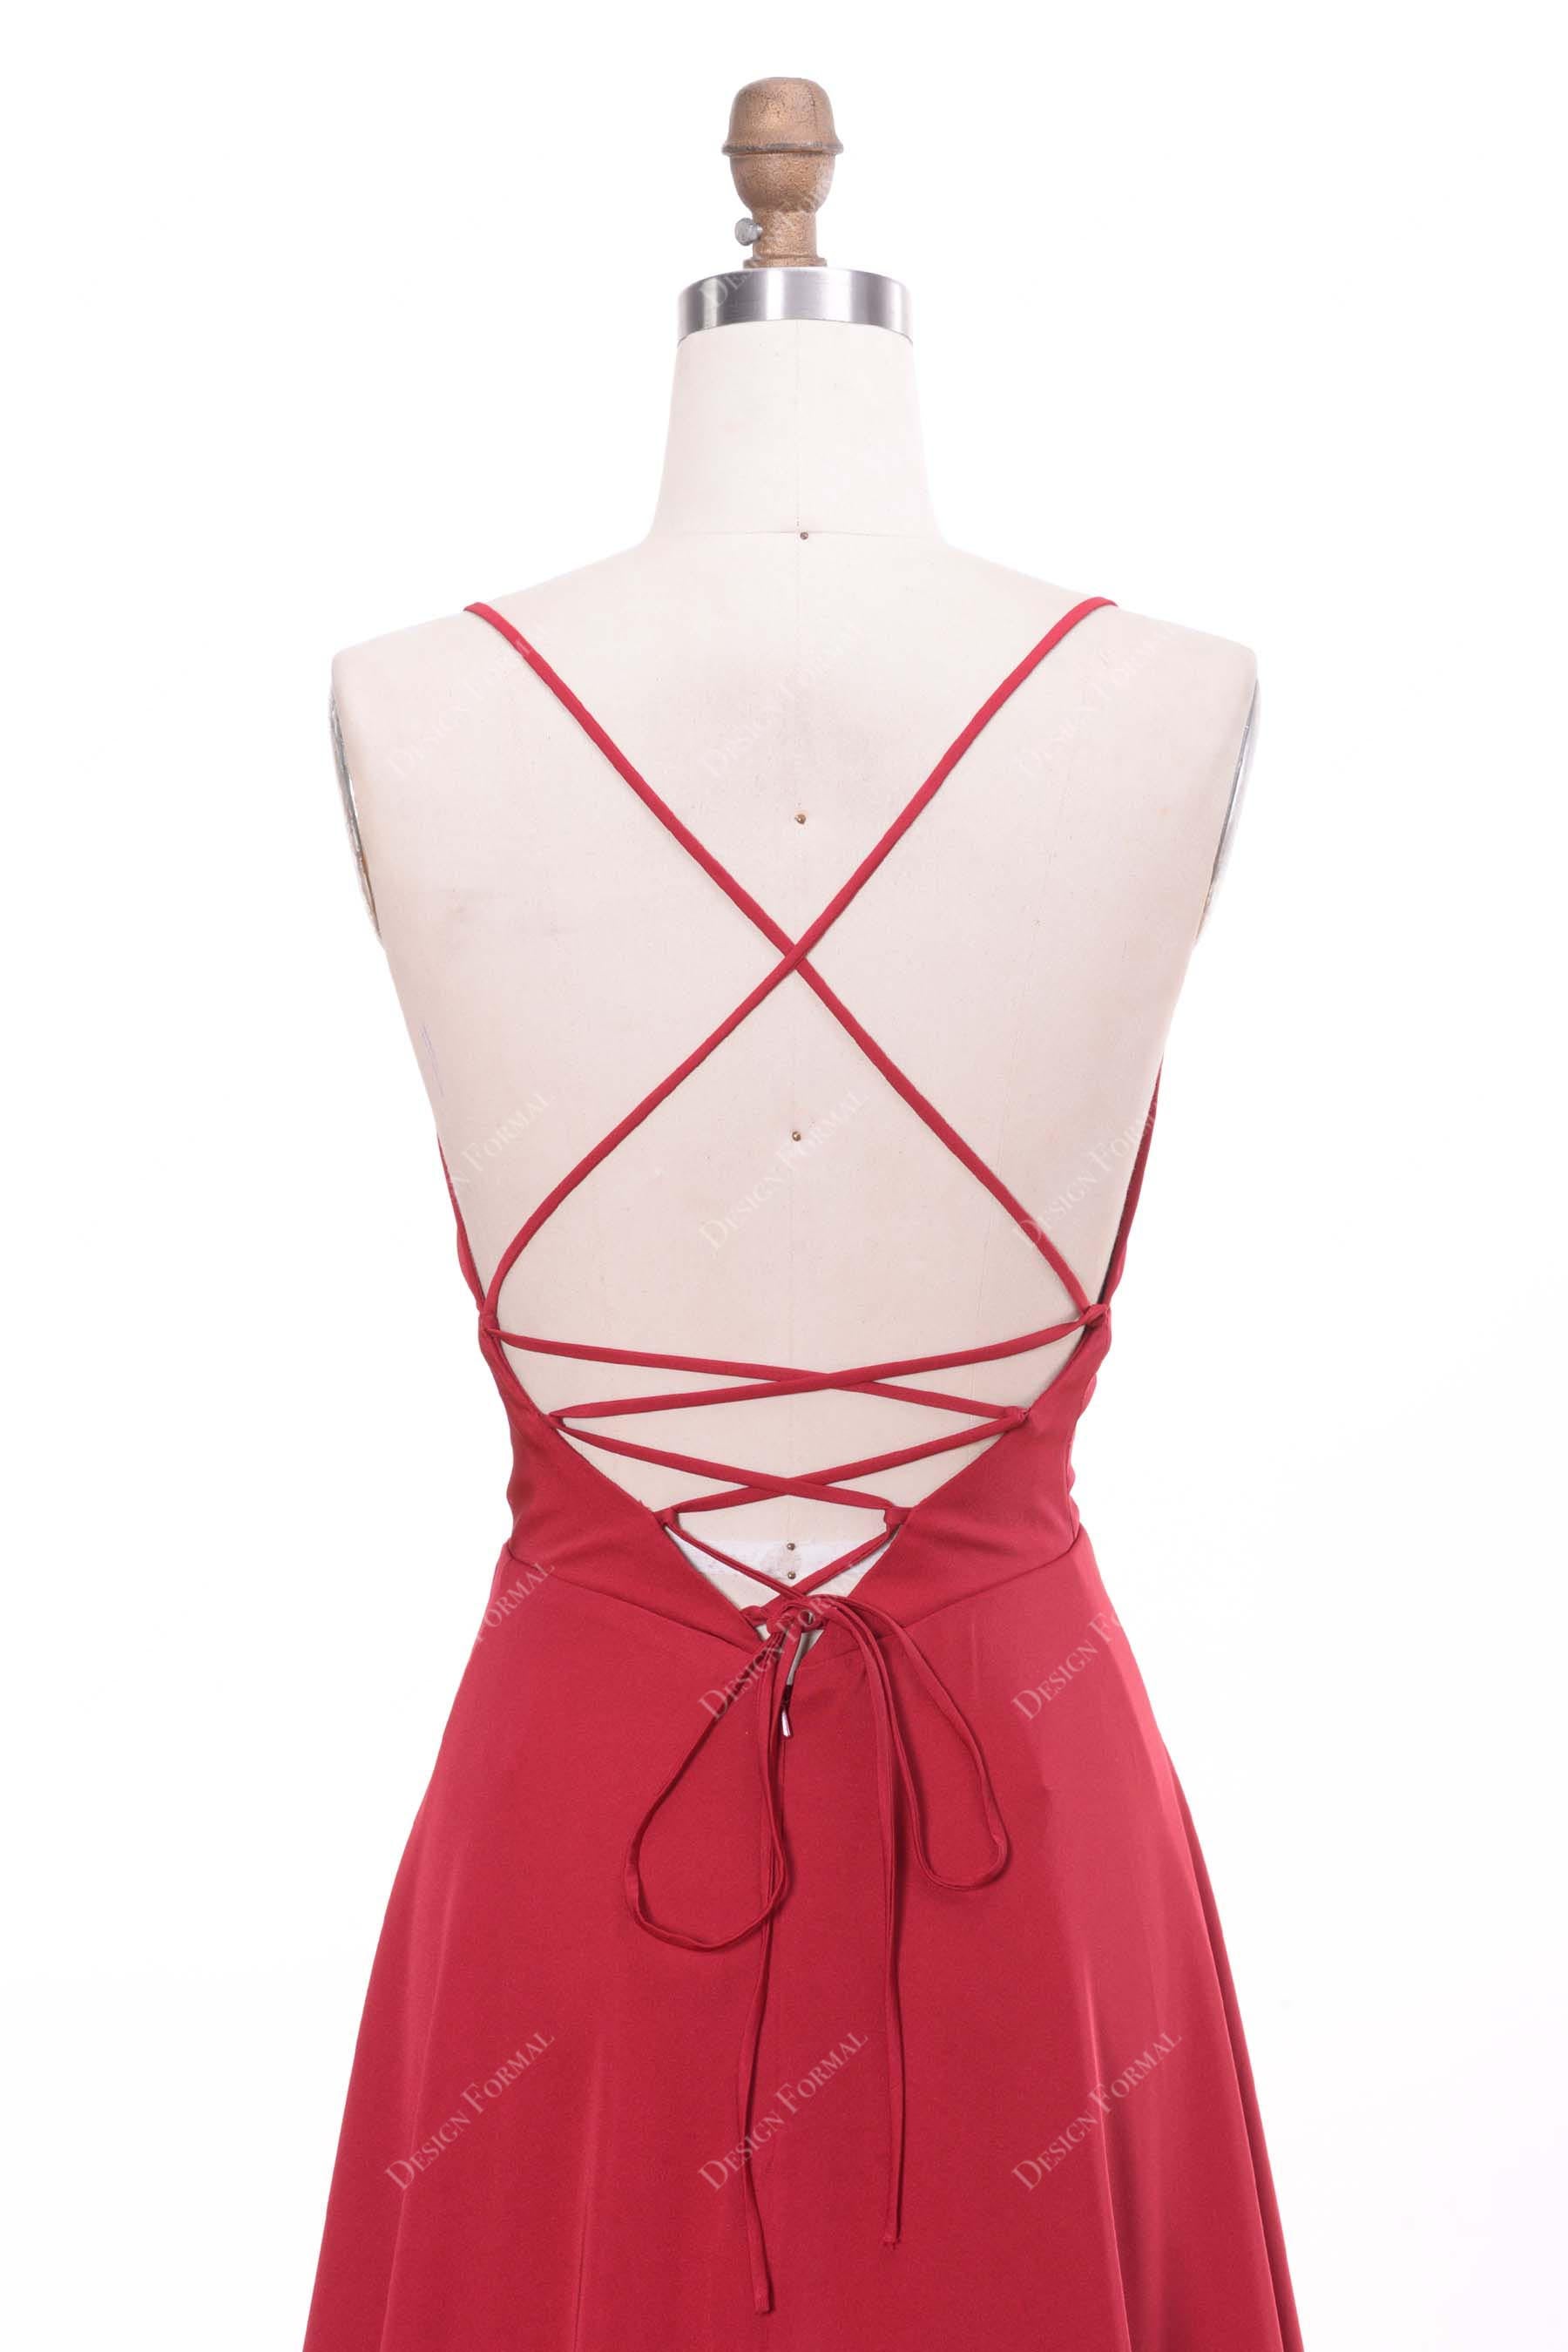 crisscross open back thin straps red prom dress